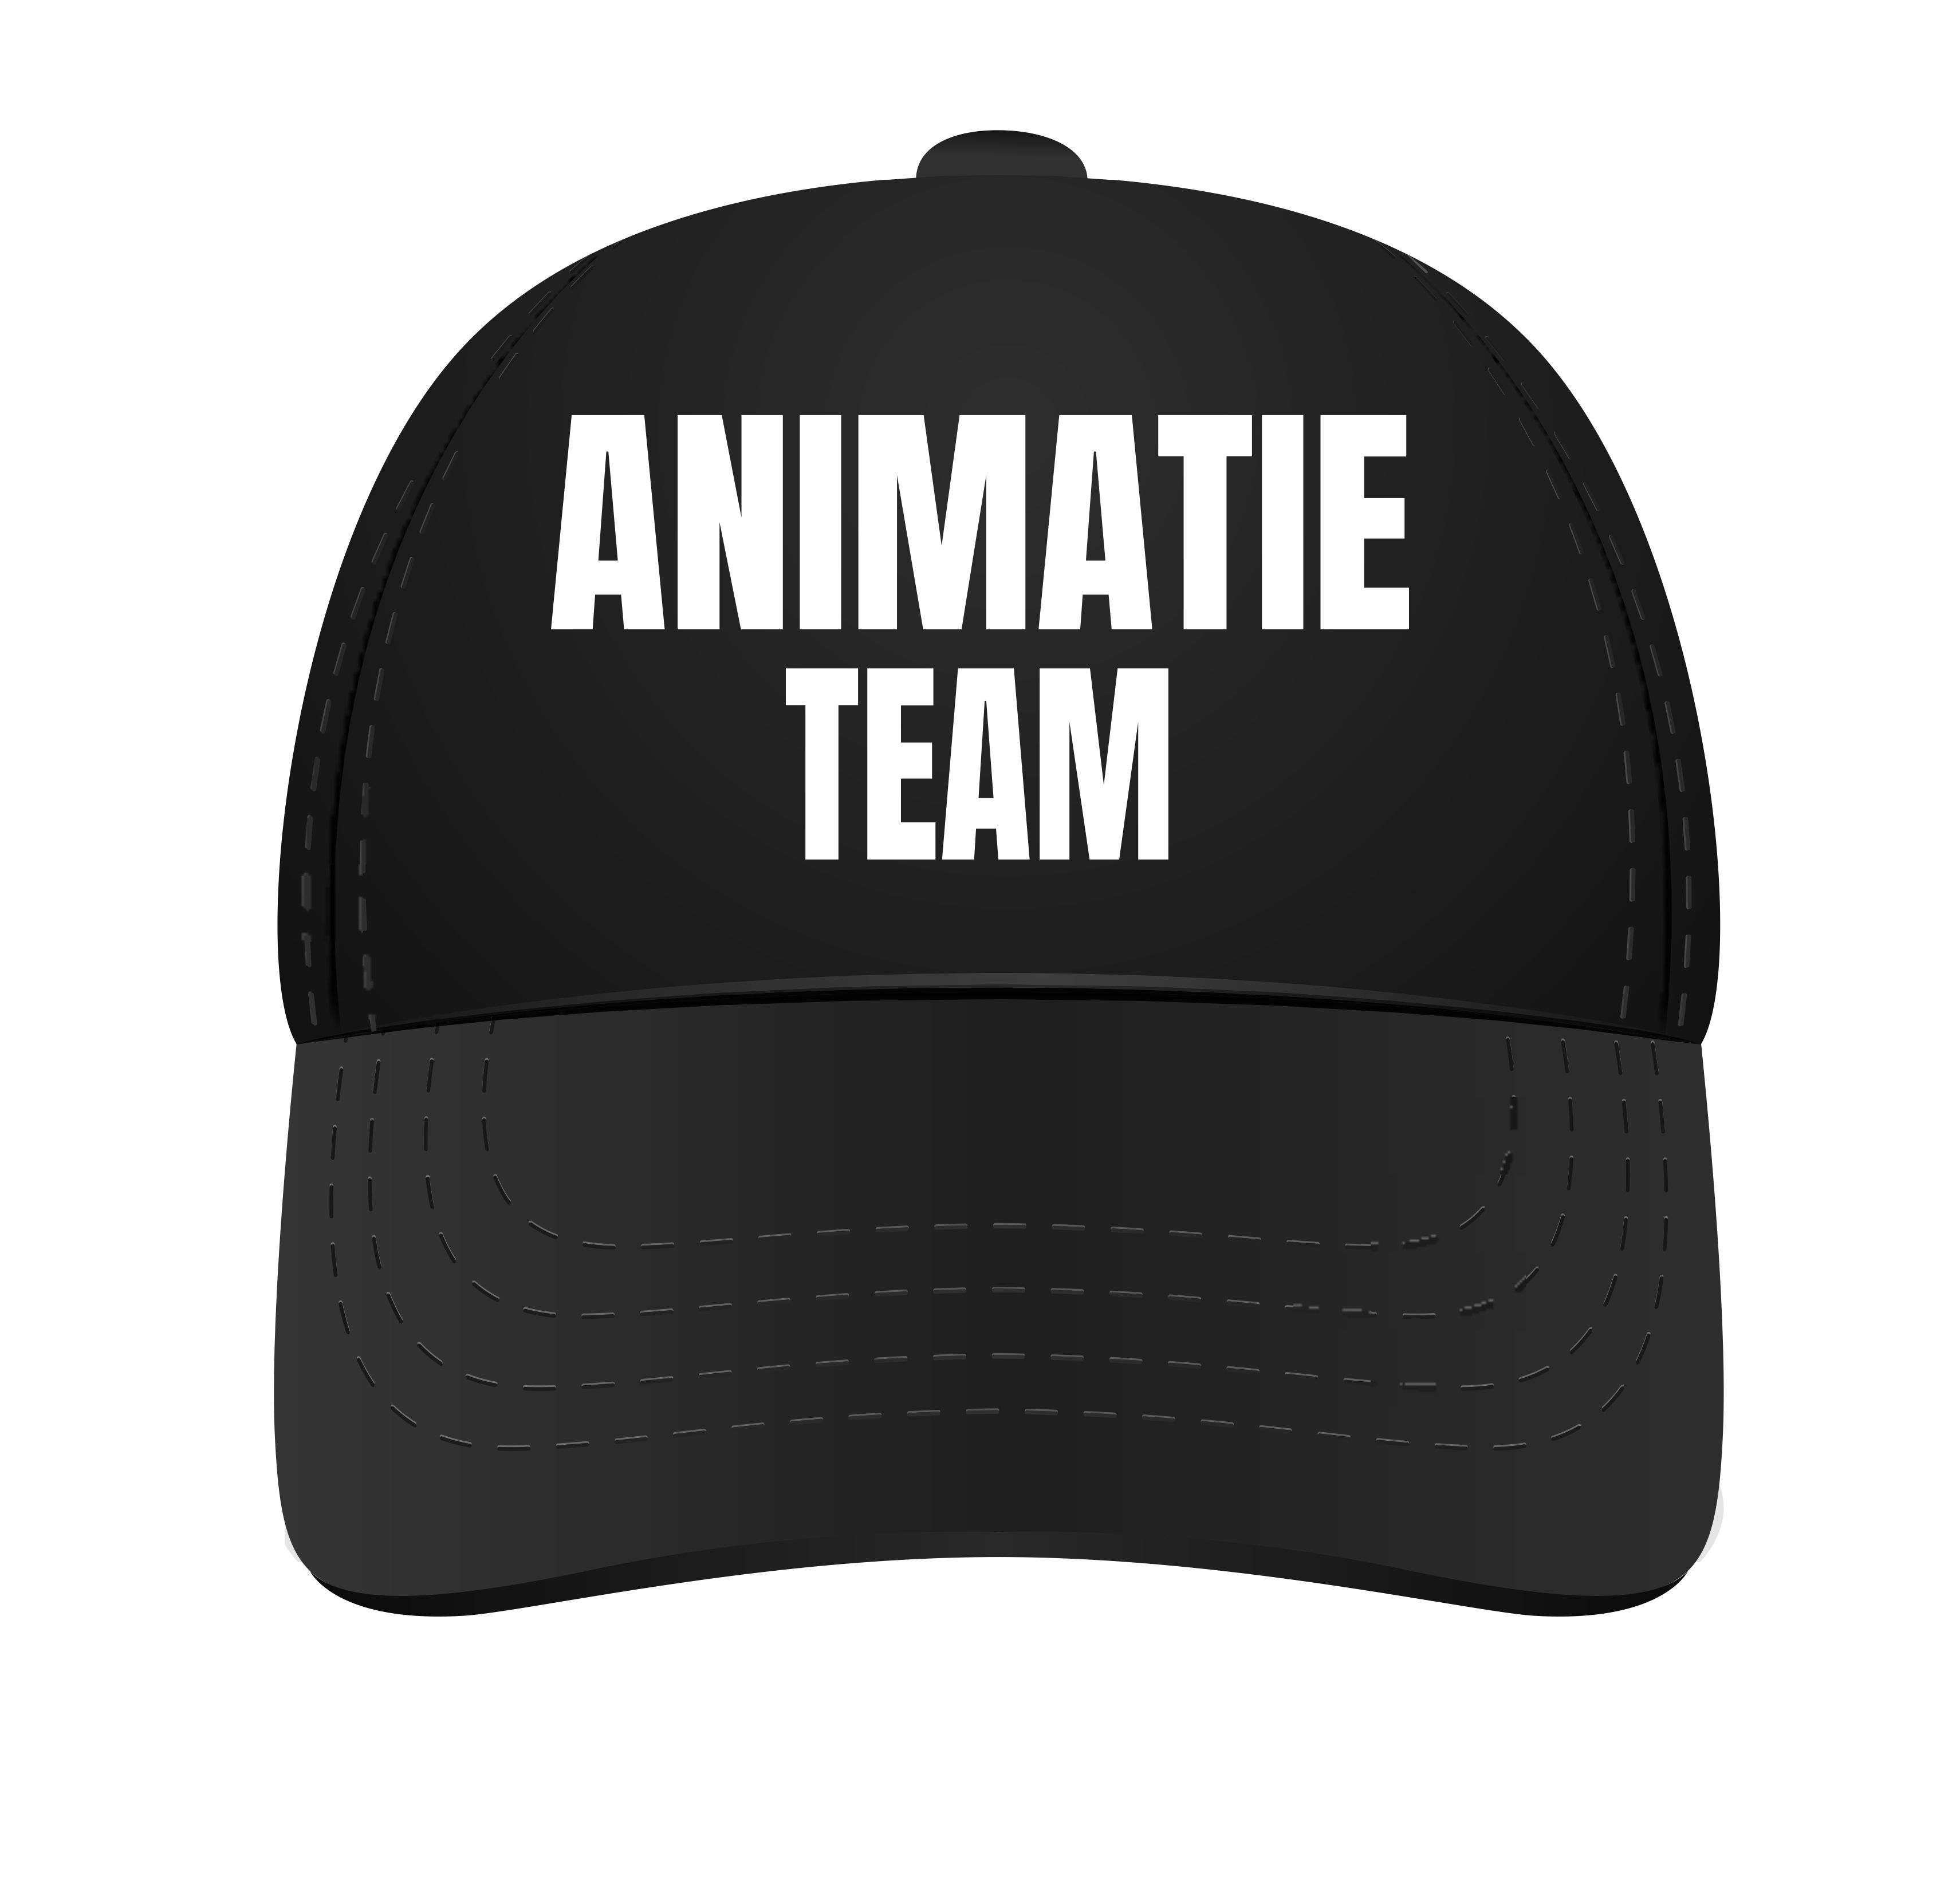 Animatie team pet